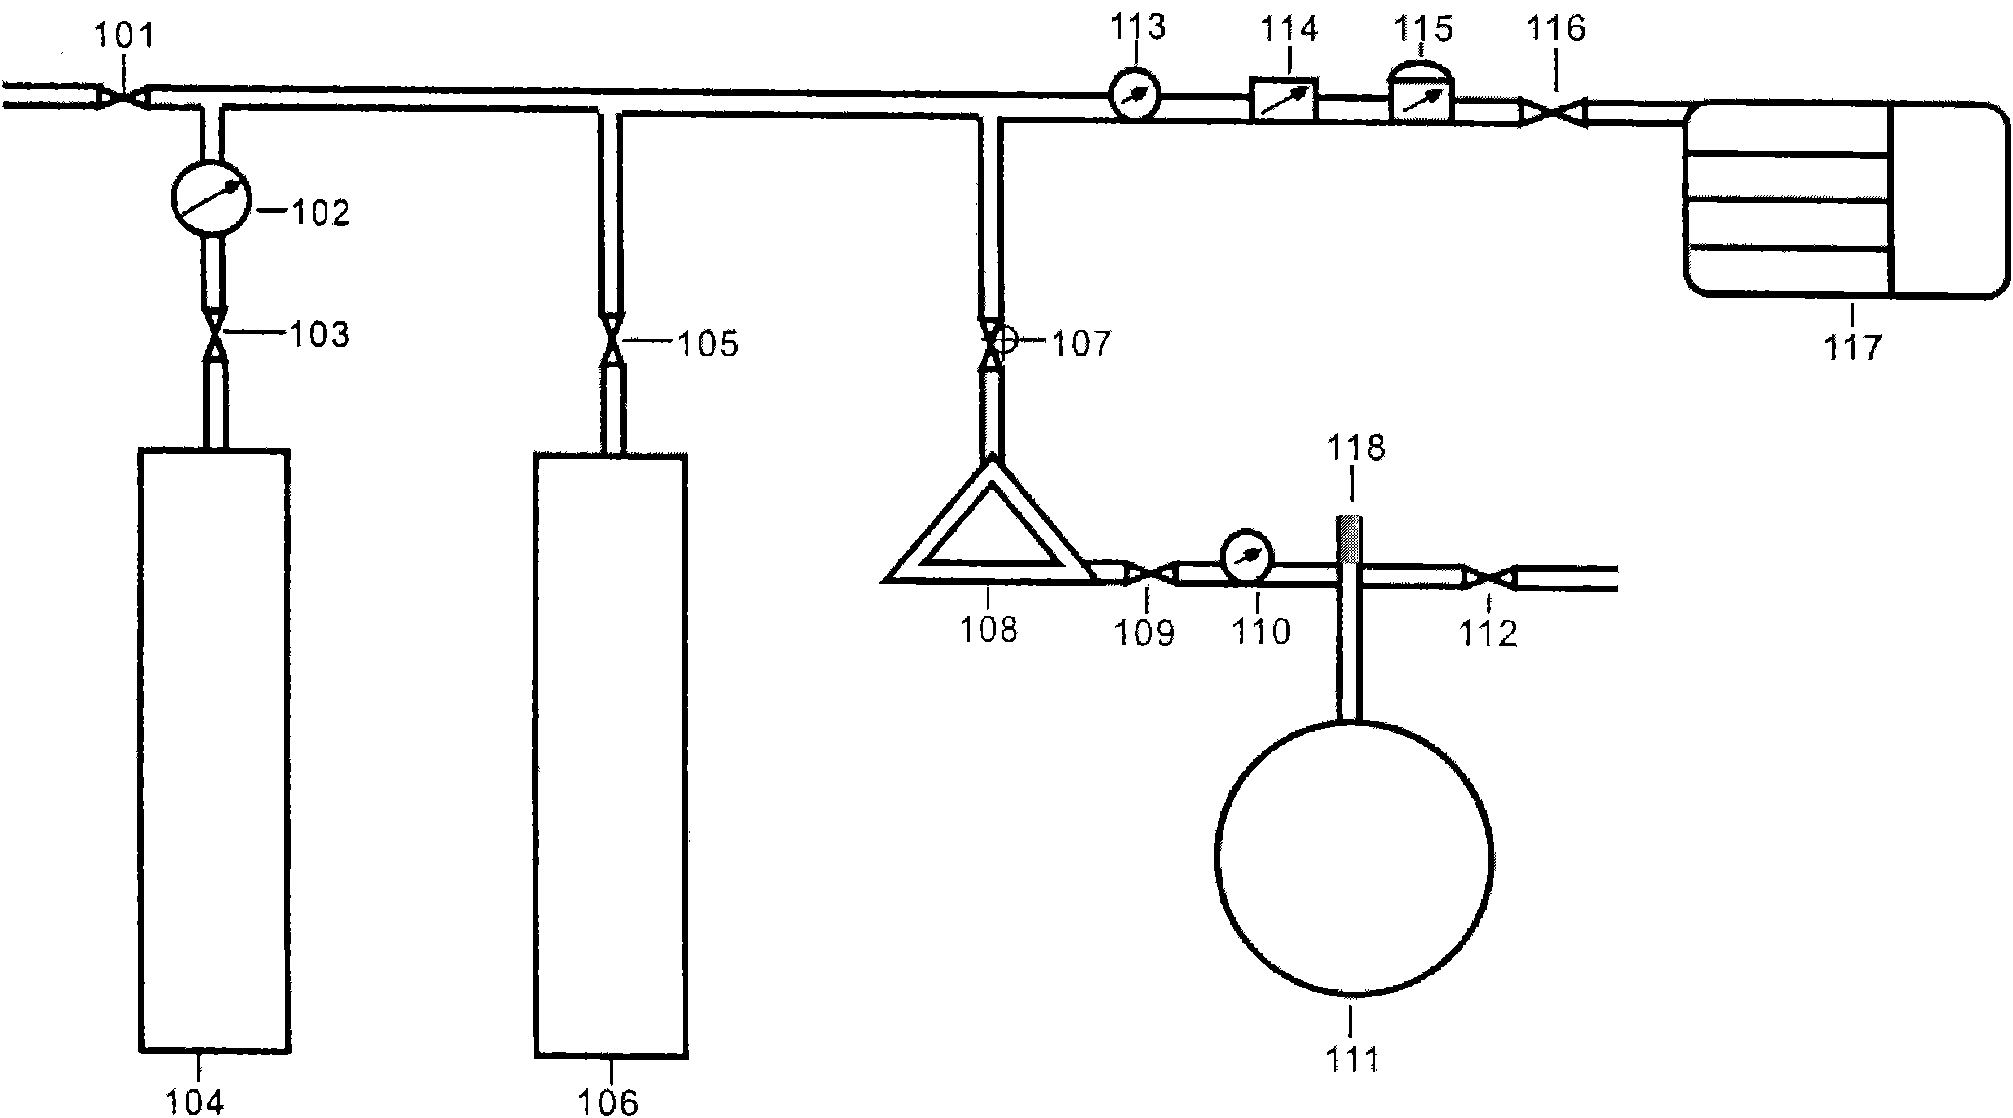 Preparation method for ethyl nitrite standard gas